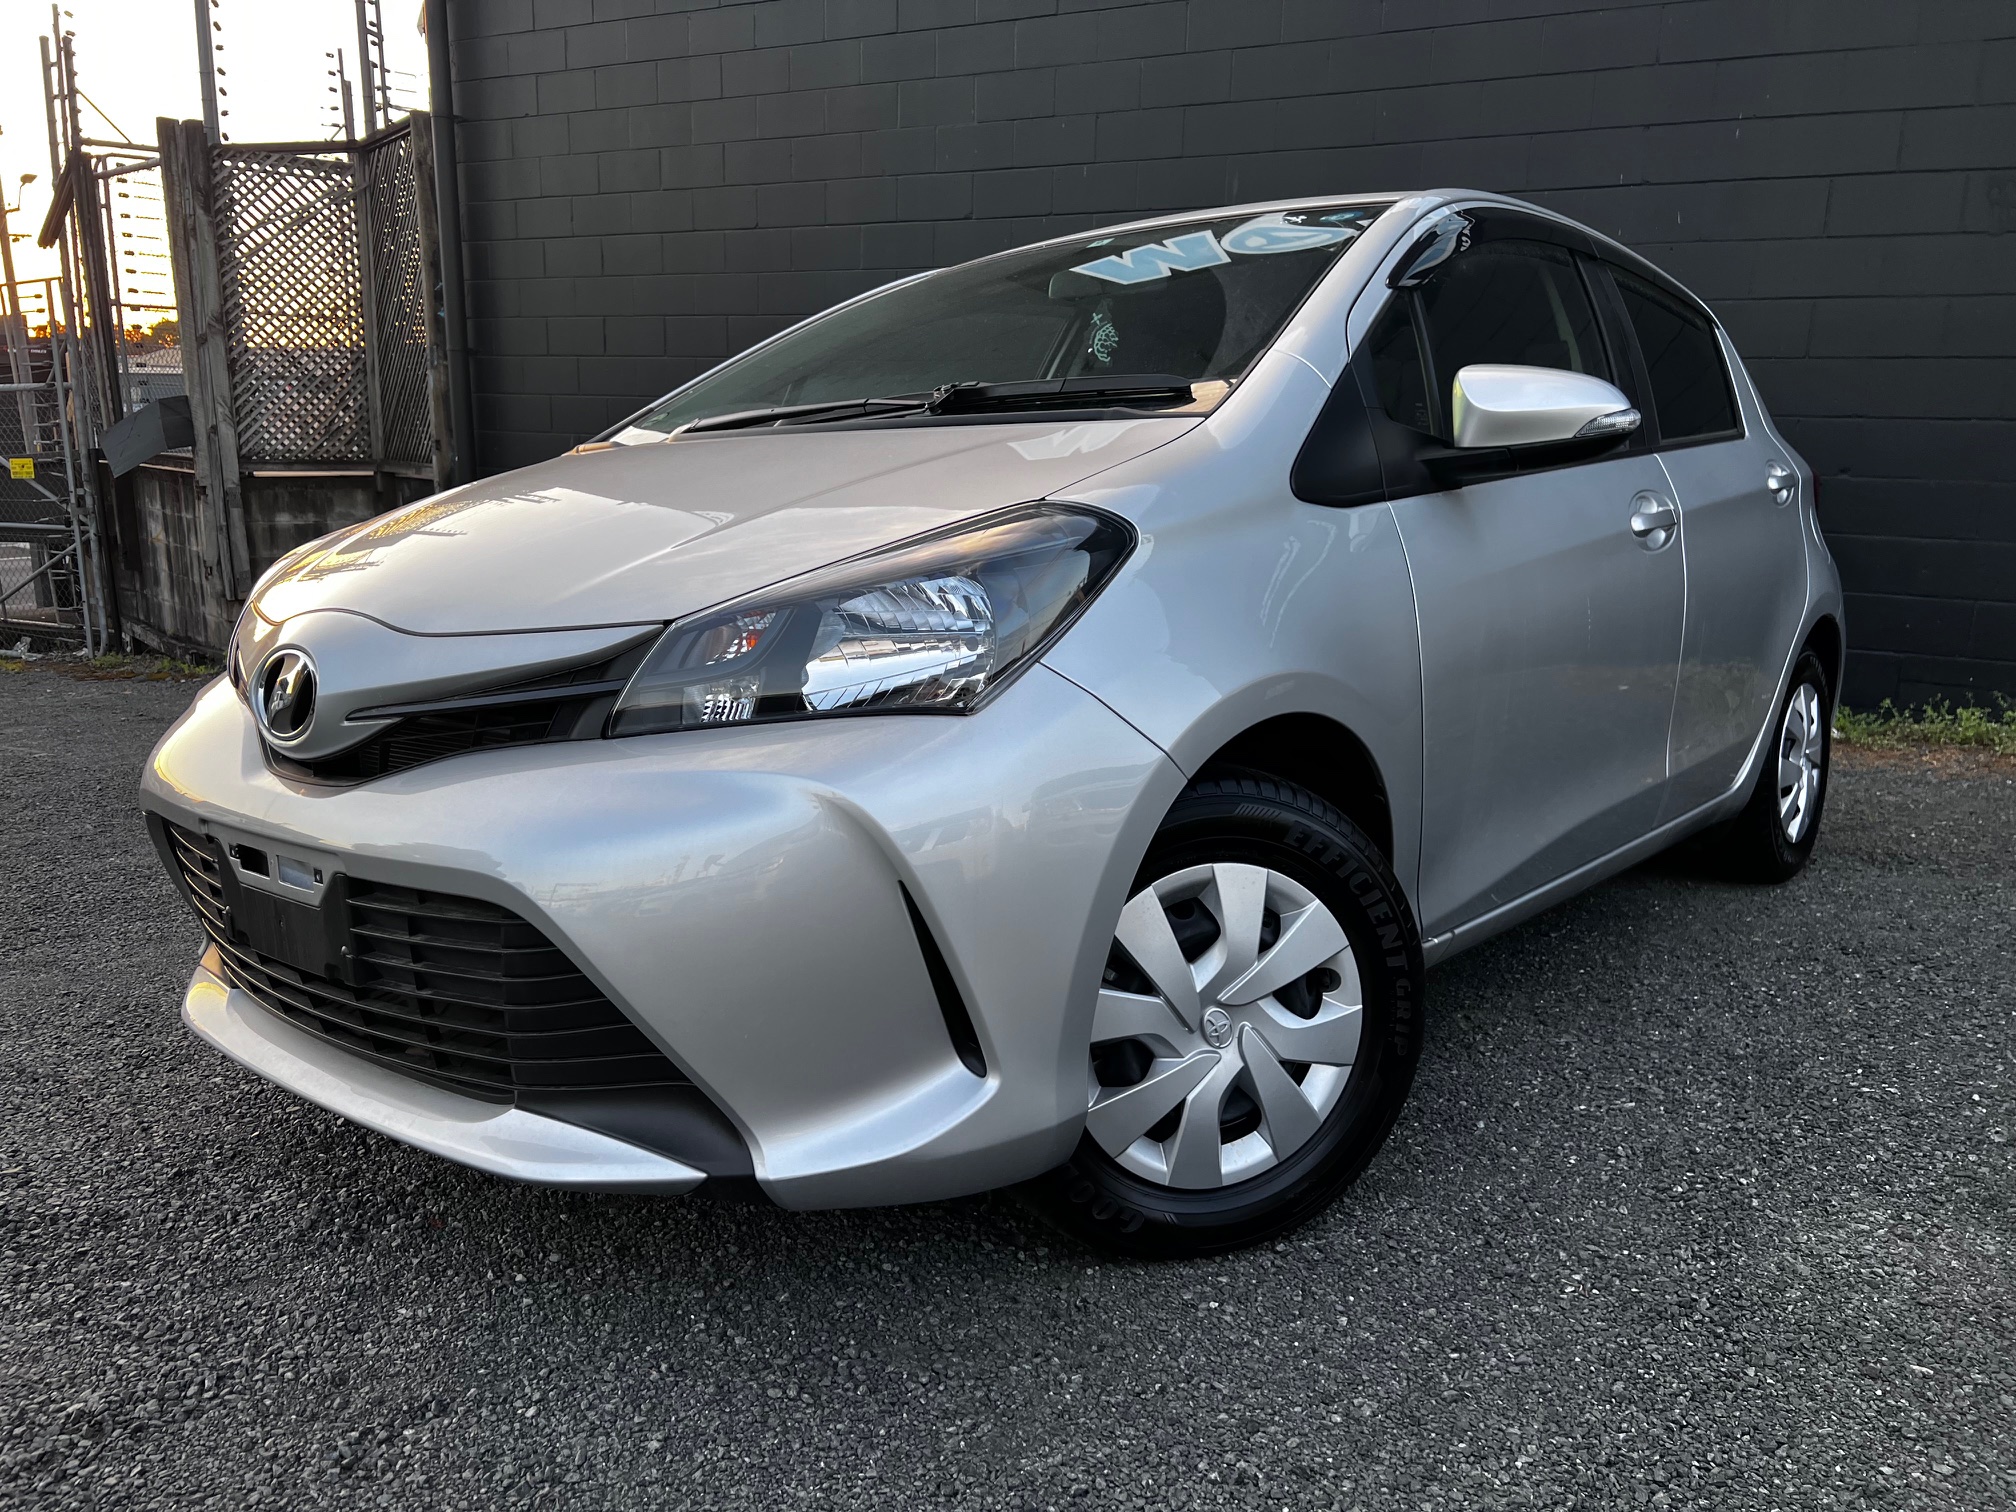 Toyota Vitz 2014 Image 1